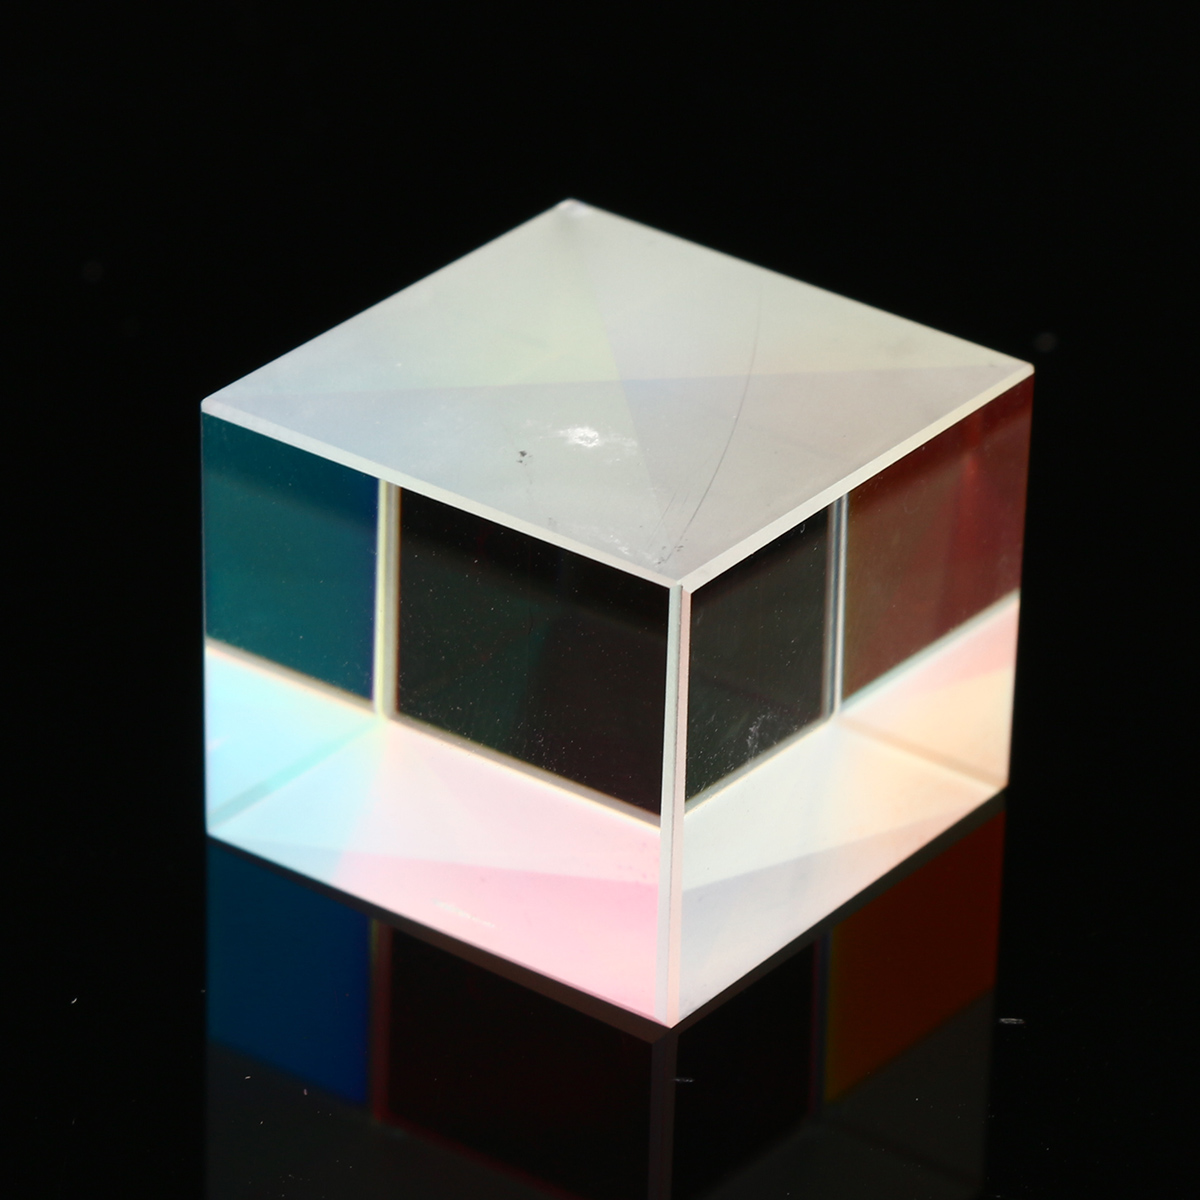 

4Pcs 20x20x17mm Defective Cross Dichroic Glass X-Cube Prism Cube RGB Combiner Splitter Prism